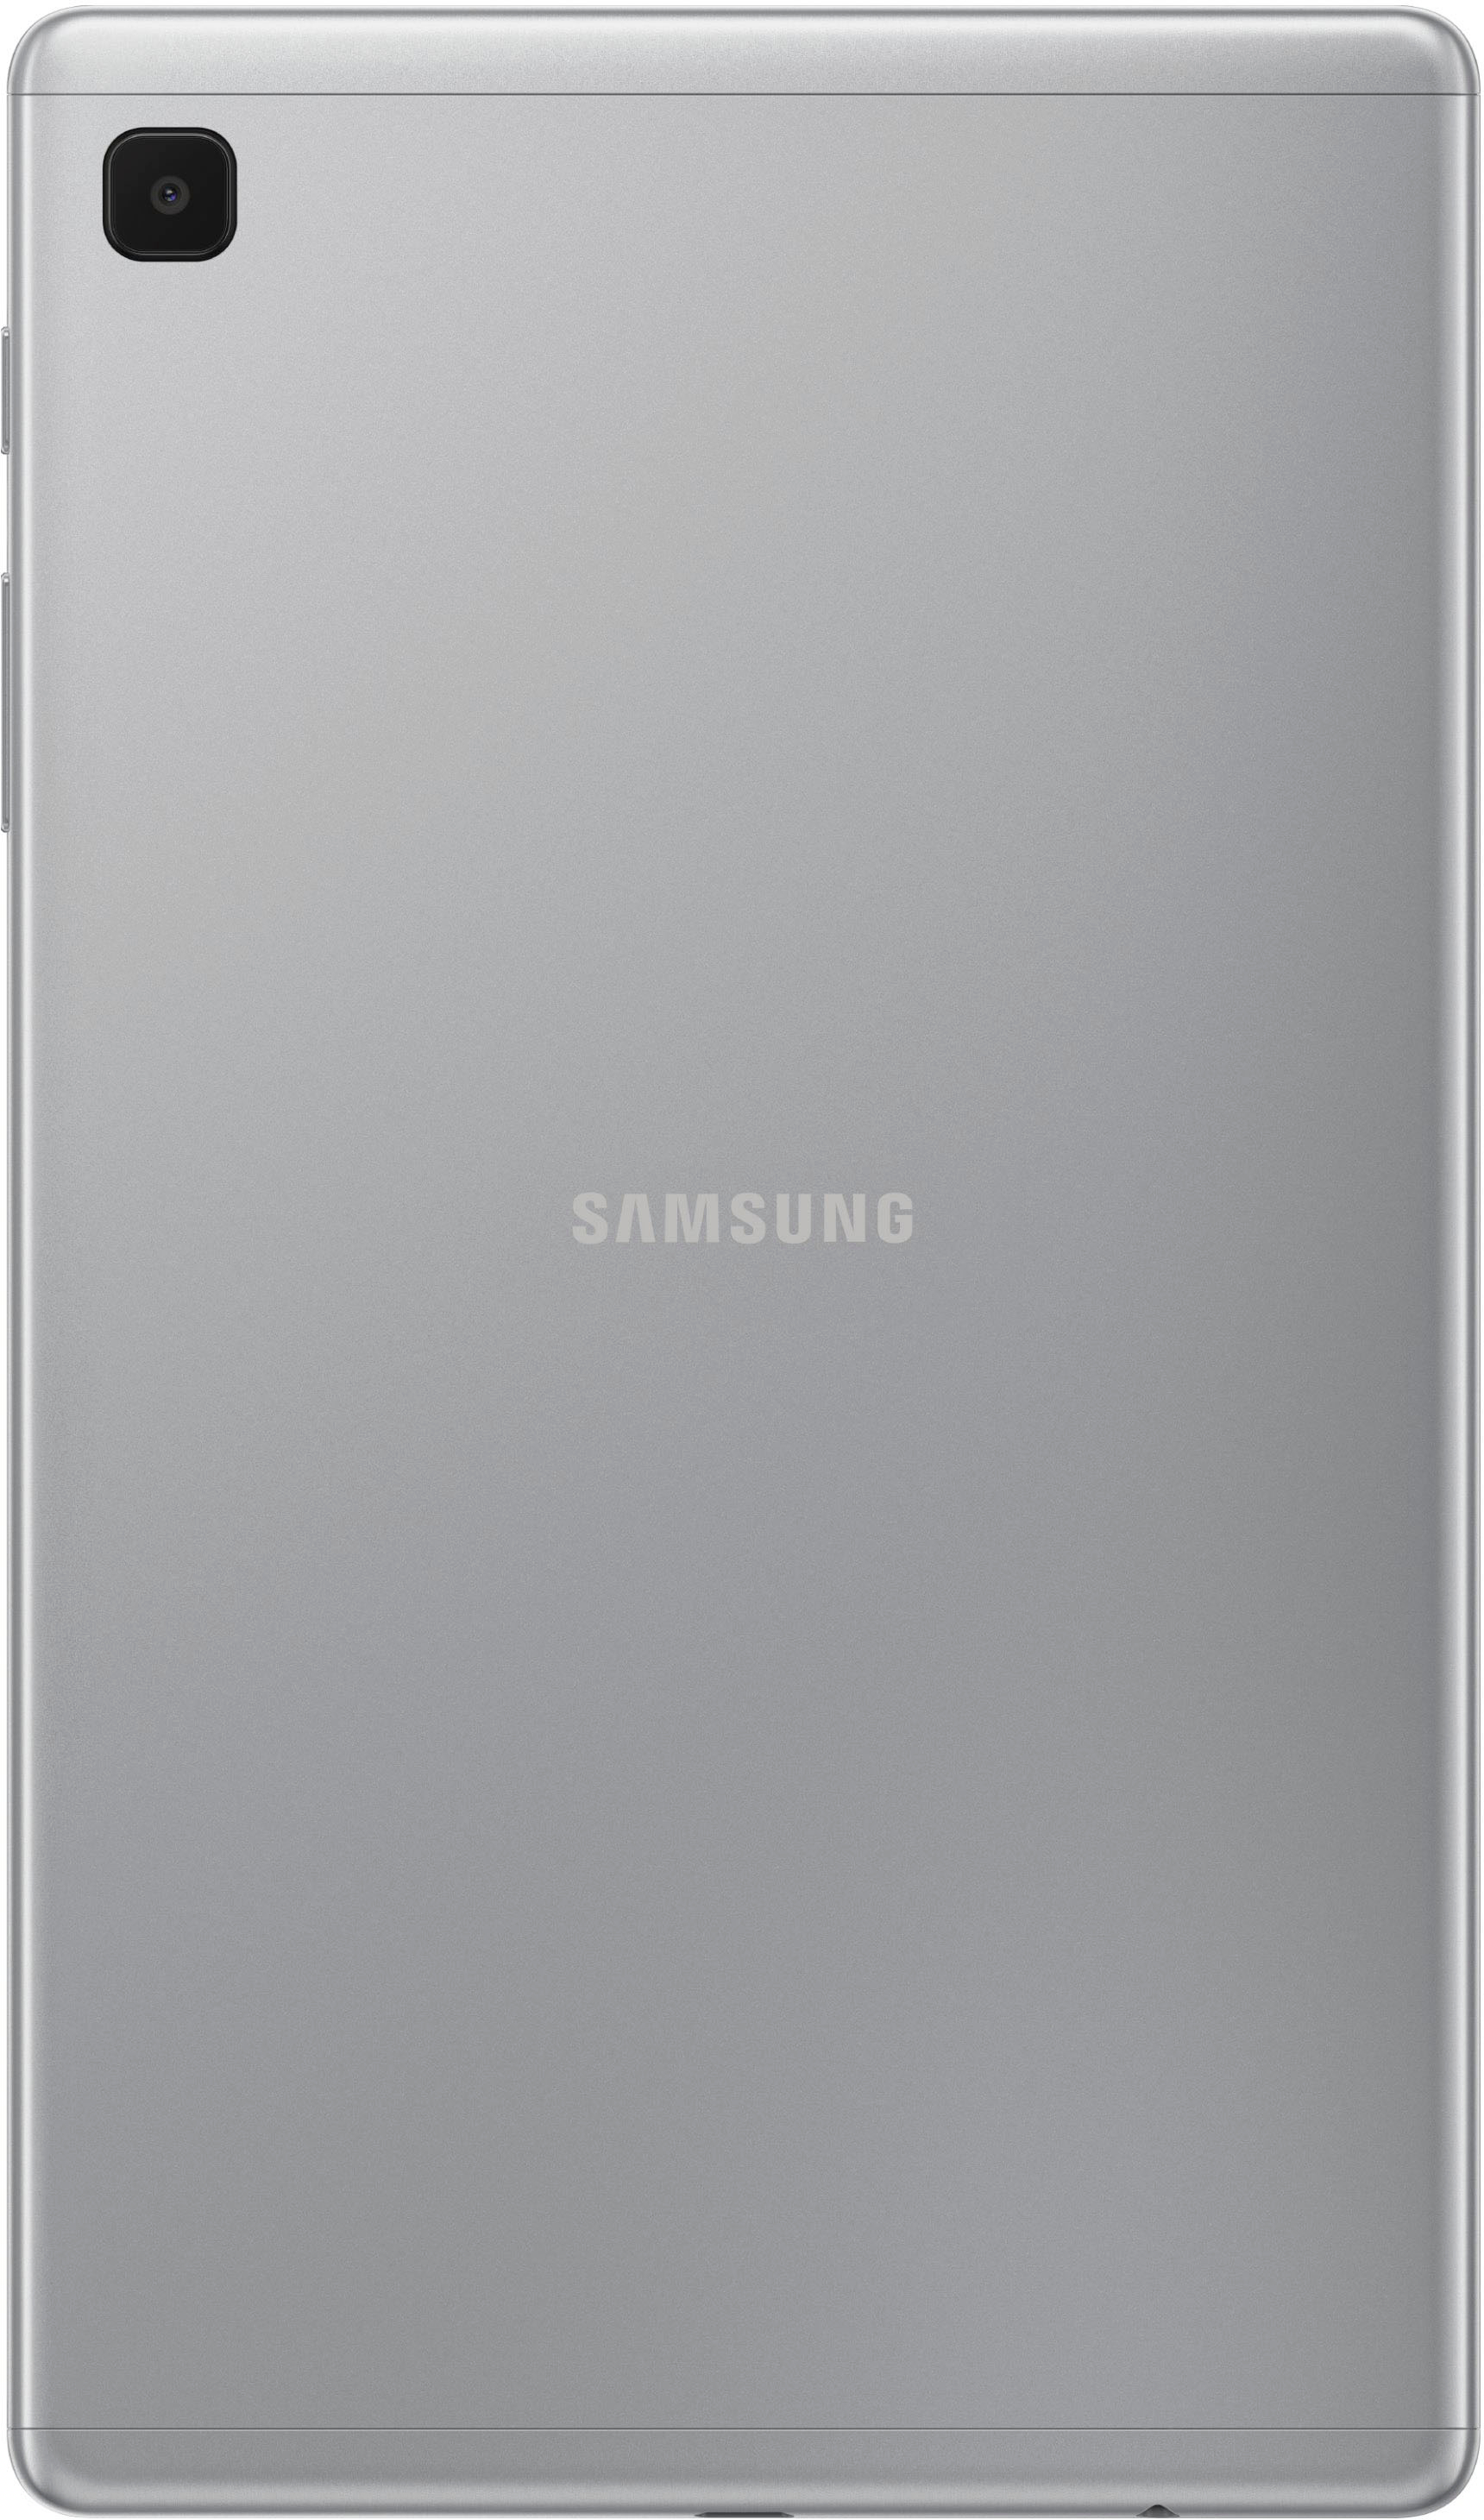 Galaxy Tab A7 Lite 8.7, 32GB, Silver (WiFi) Tablets - SM-T220NZSAXAR